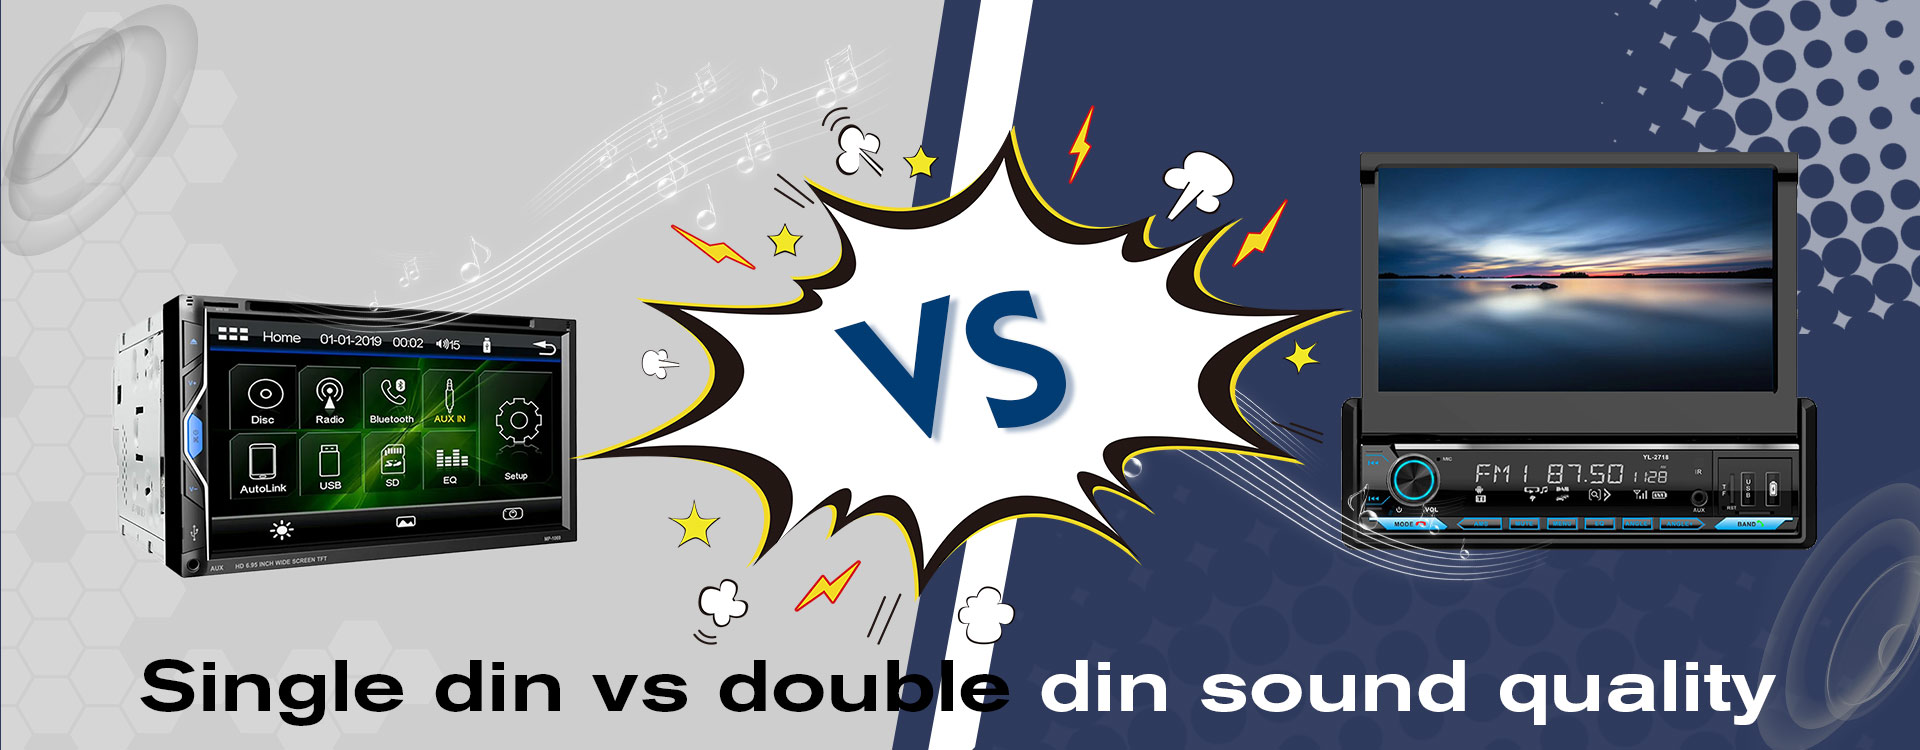 Качество звука Single DIN vs Doubdin